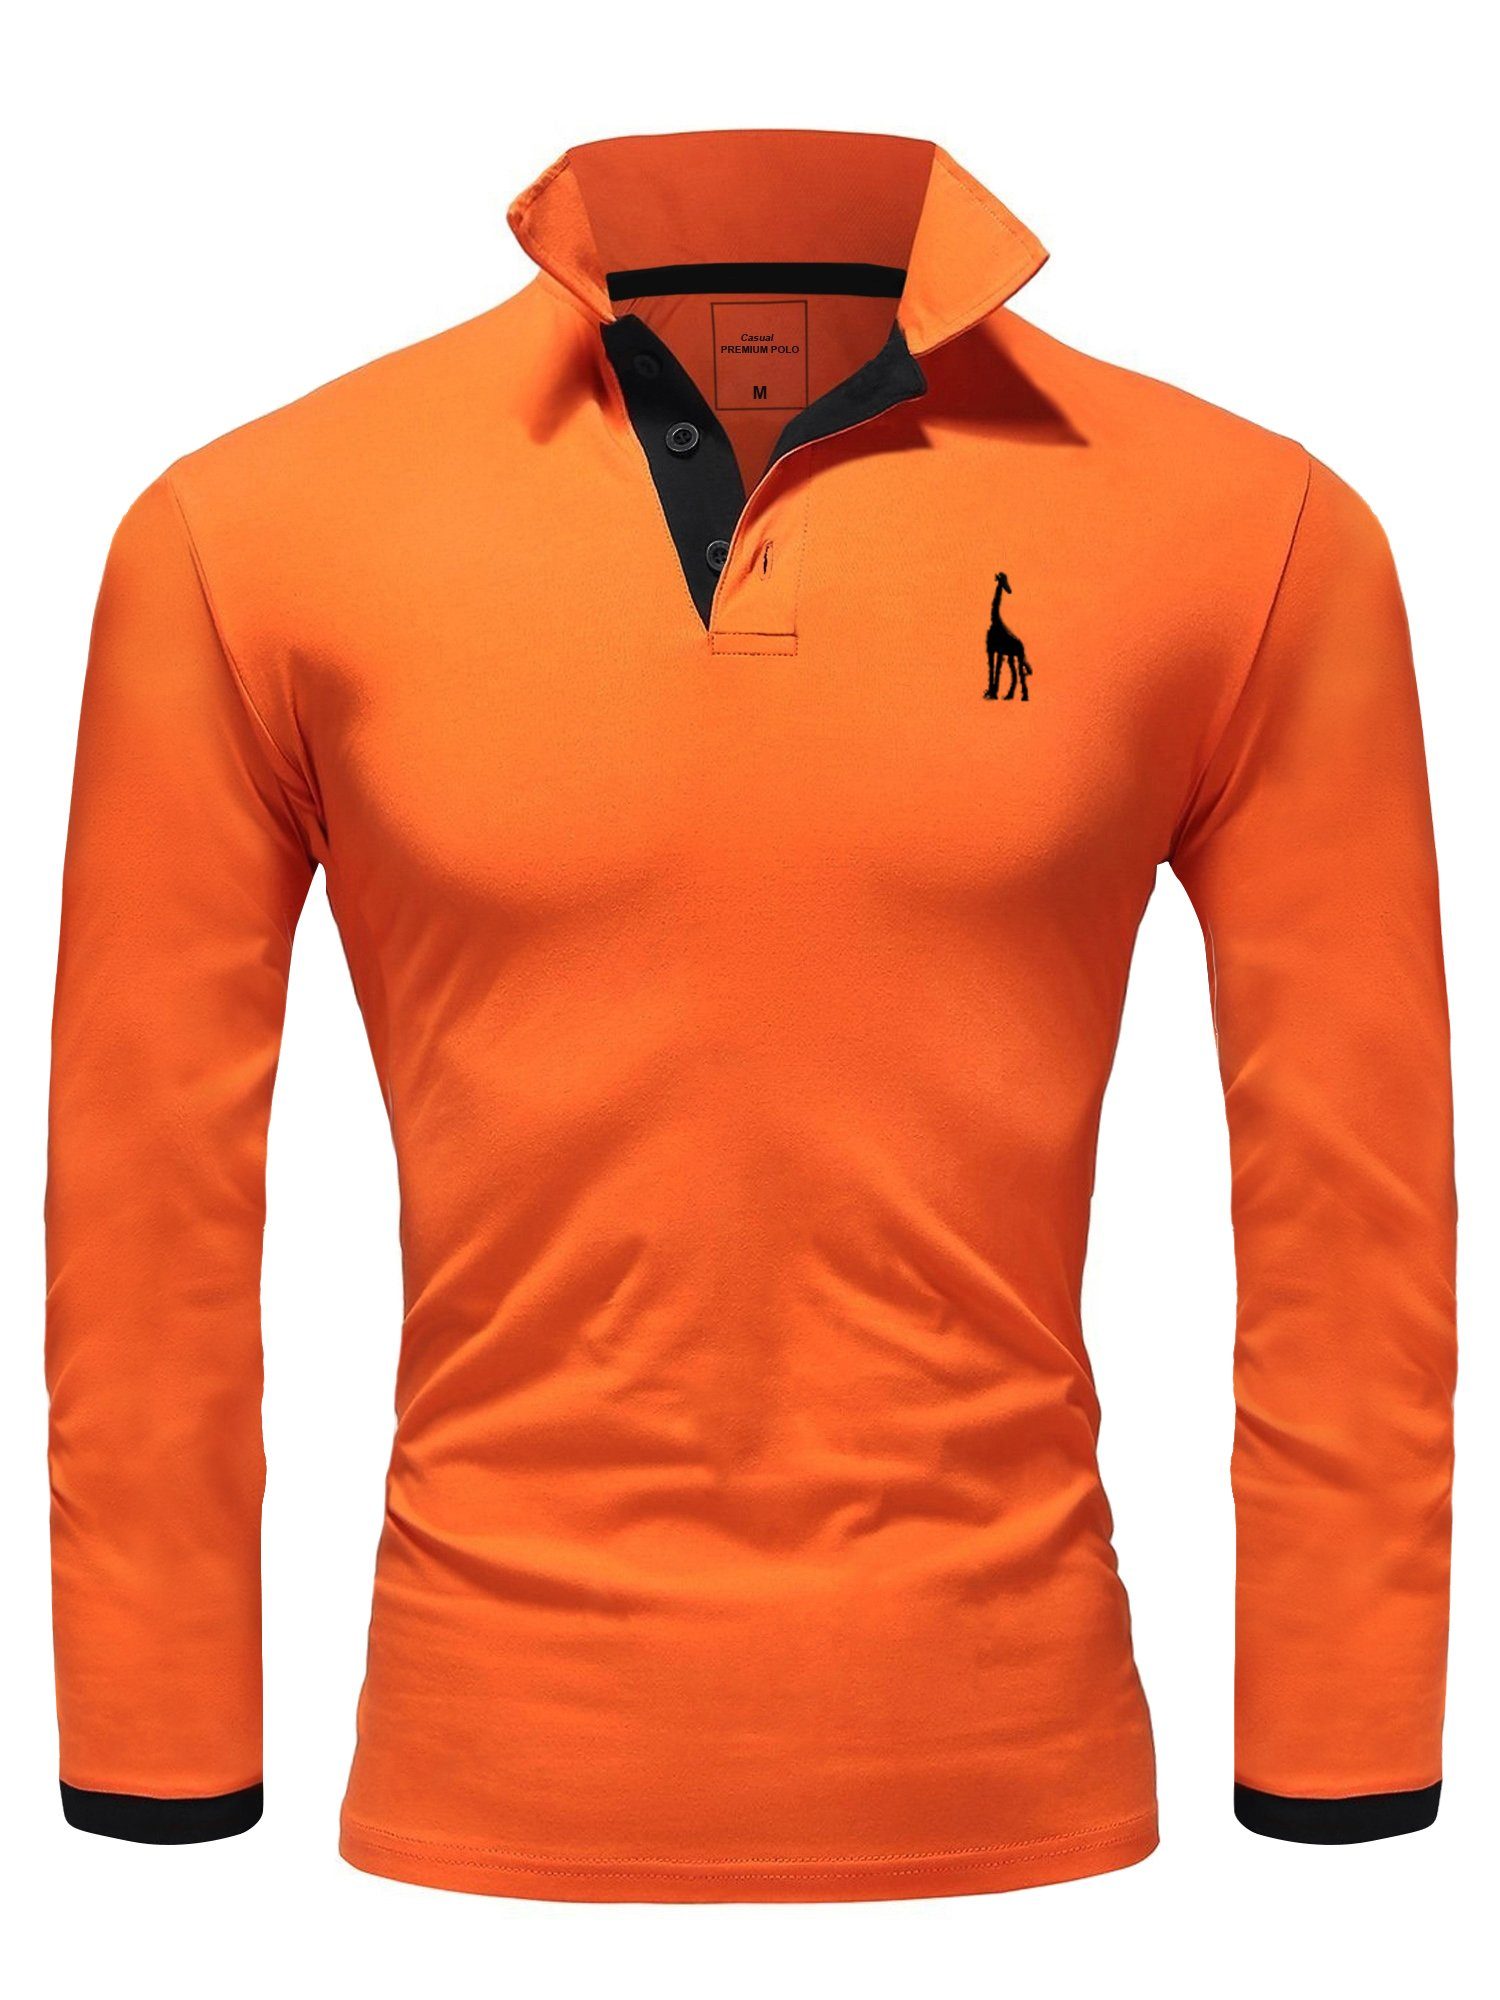 REPUBLIX Poloshirt AIDEN Herren Basic Langarm Kontrast Polo Hemd Orange/Schwarz